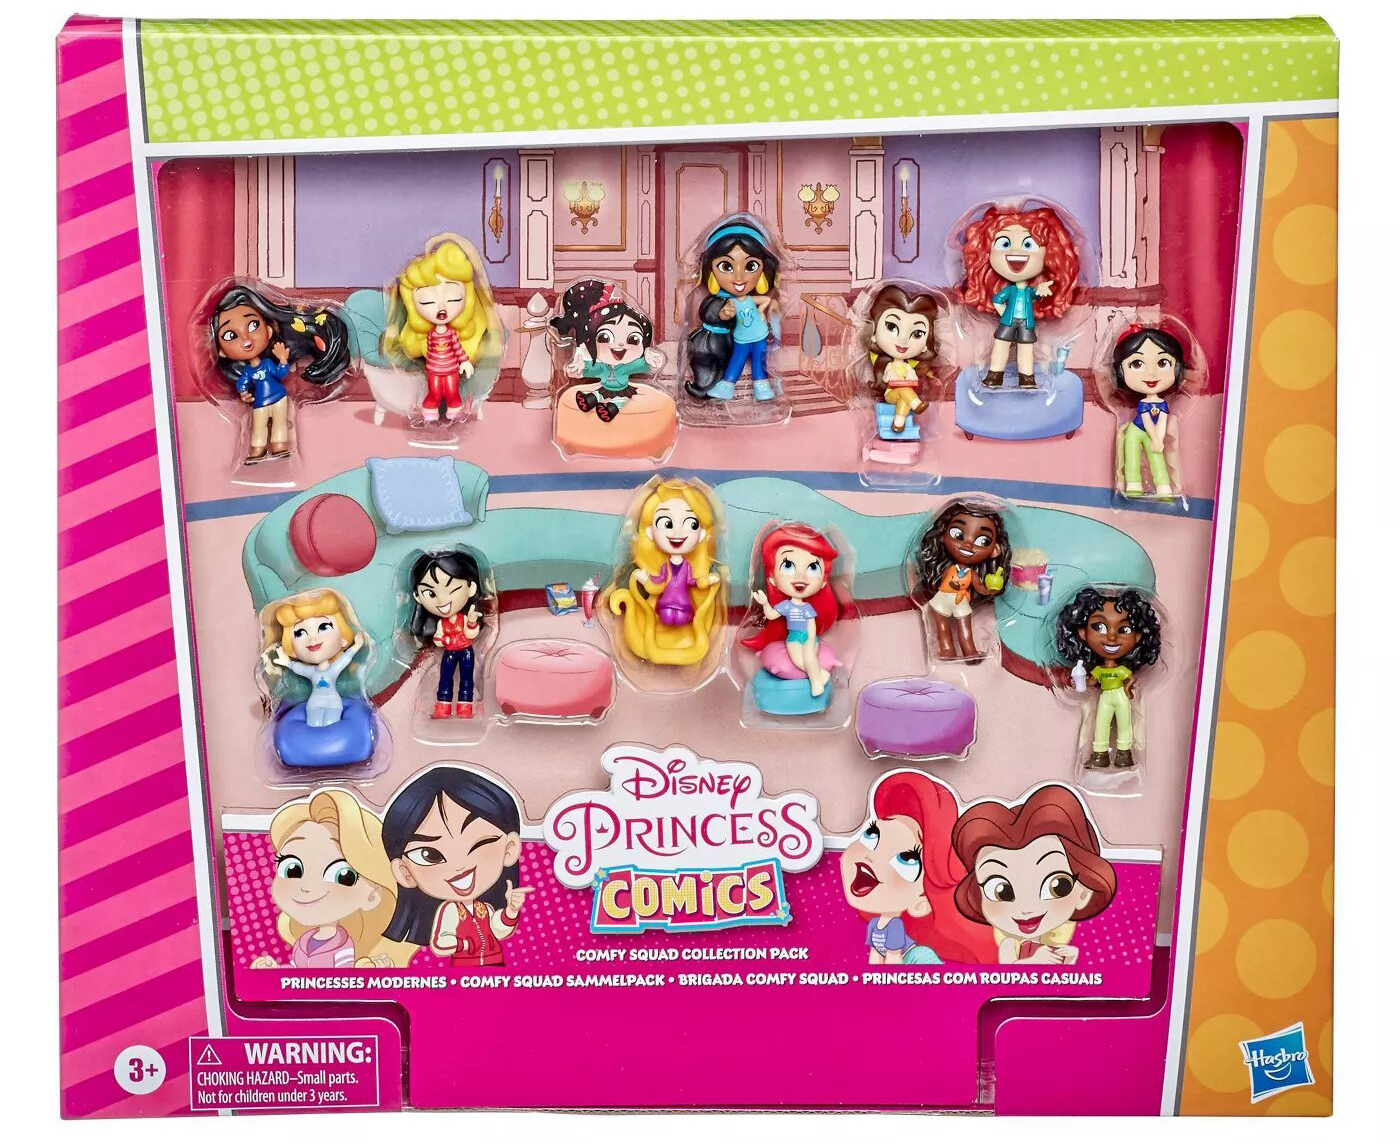 Disney Princess Comics Minis Comfy Squad Collection Pack